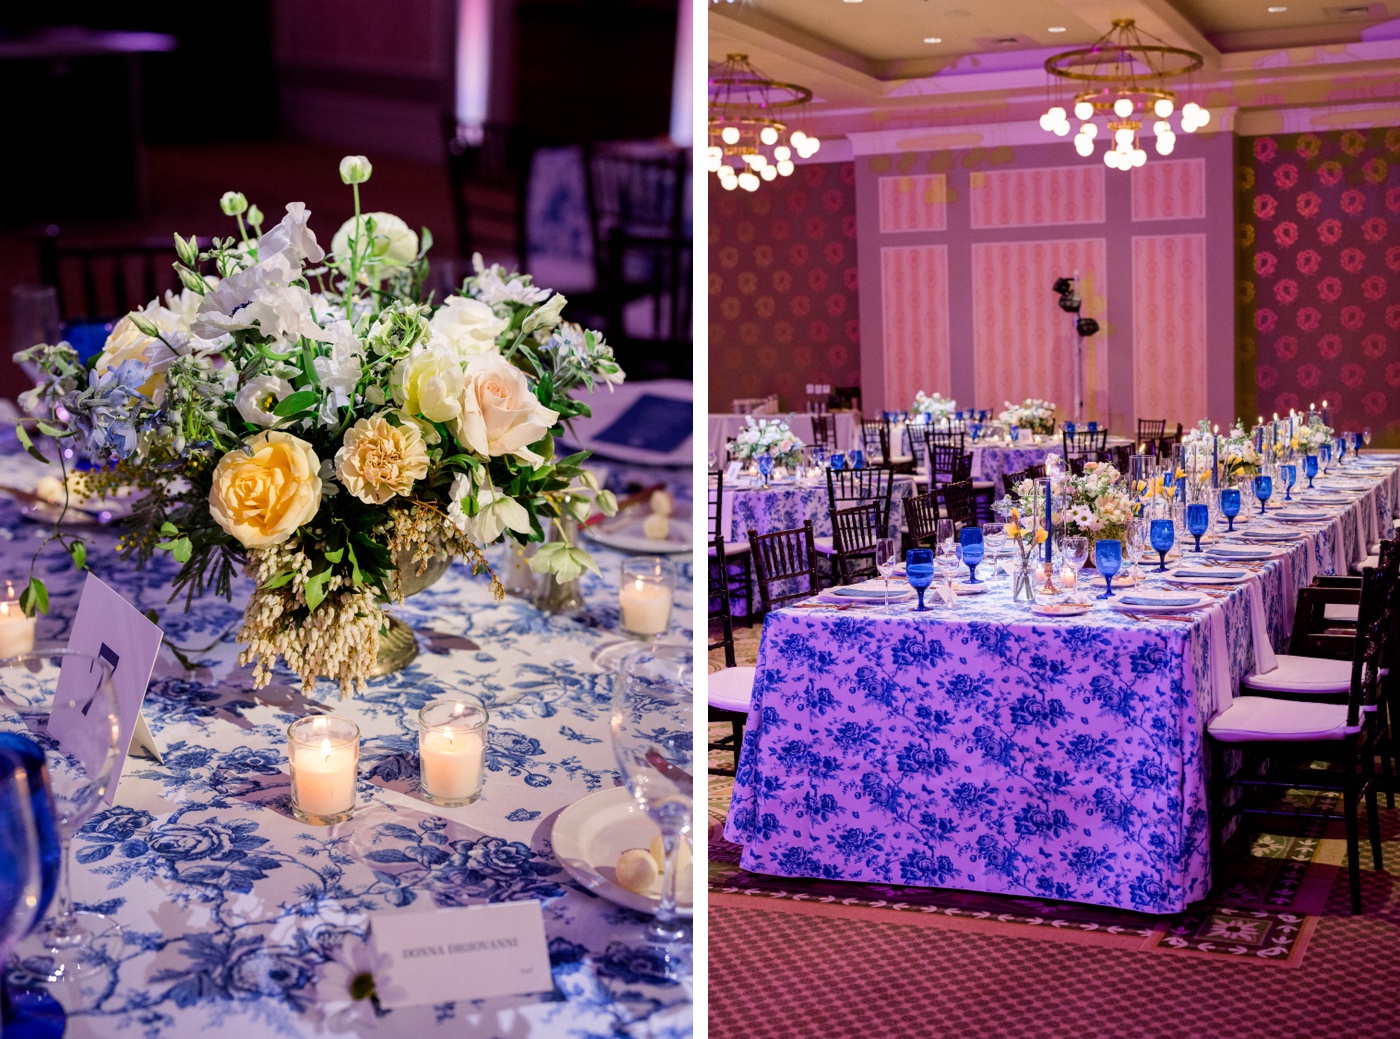 Royal blue and white wedding reception decor